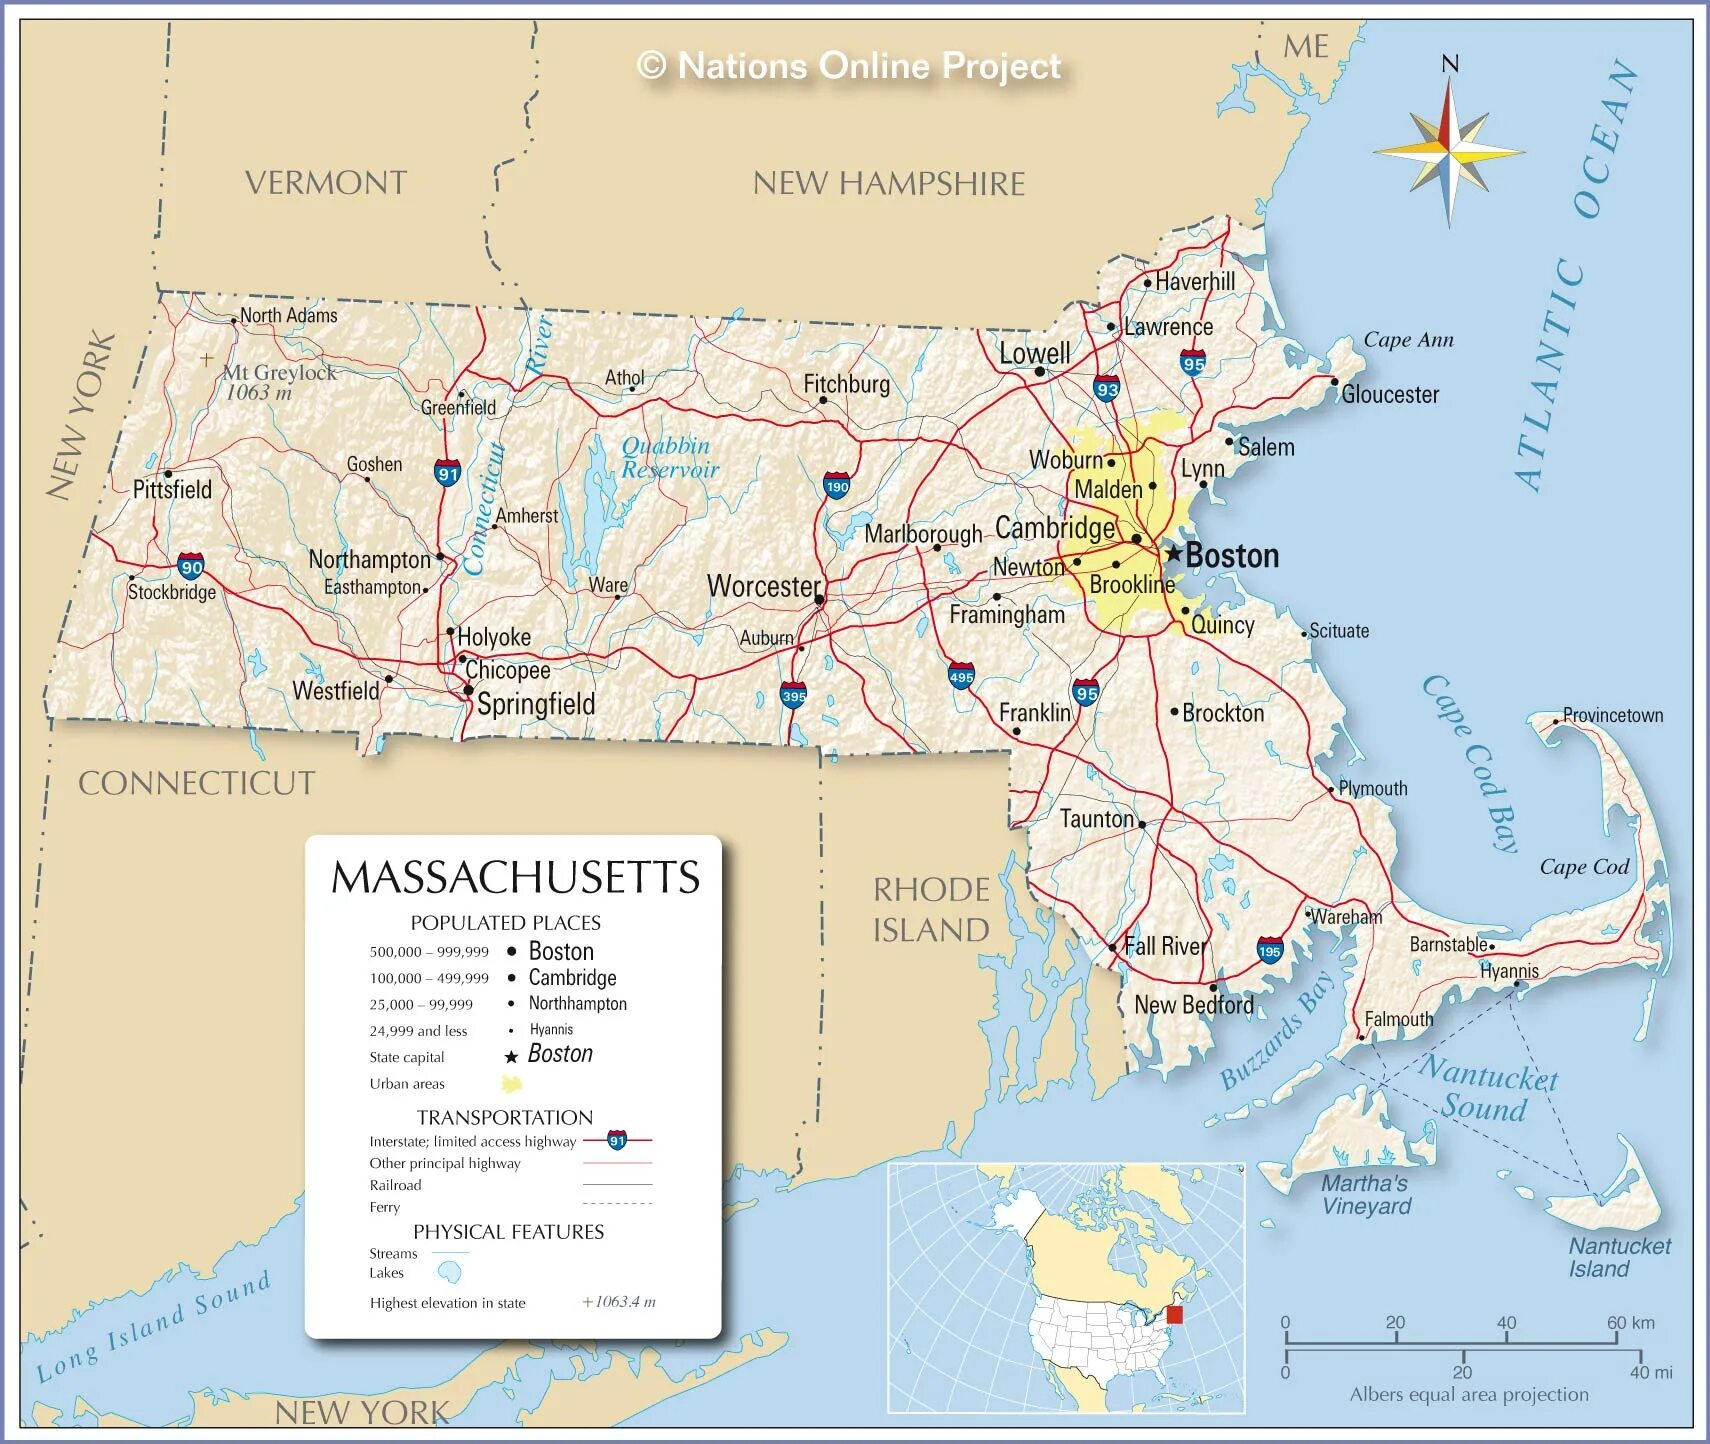 Где находится бостон. Бостон Массачусетс на карте США. Бостон США на карте и штат. Бостон штат Массачусетс на карте. Бостон штат Массачусетс на карте США.